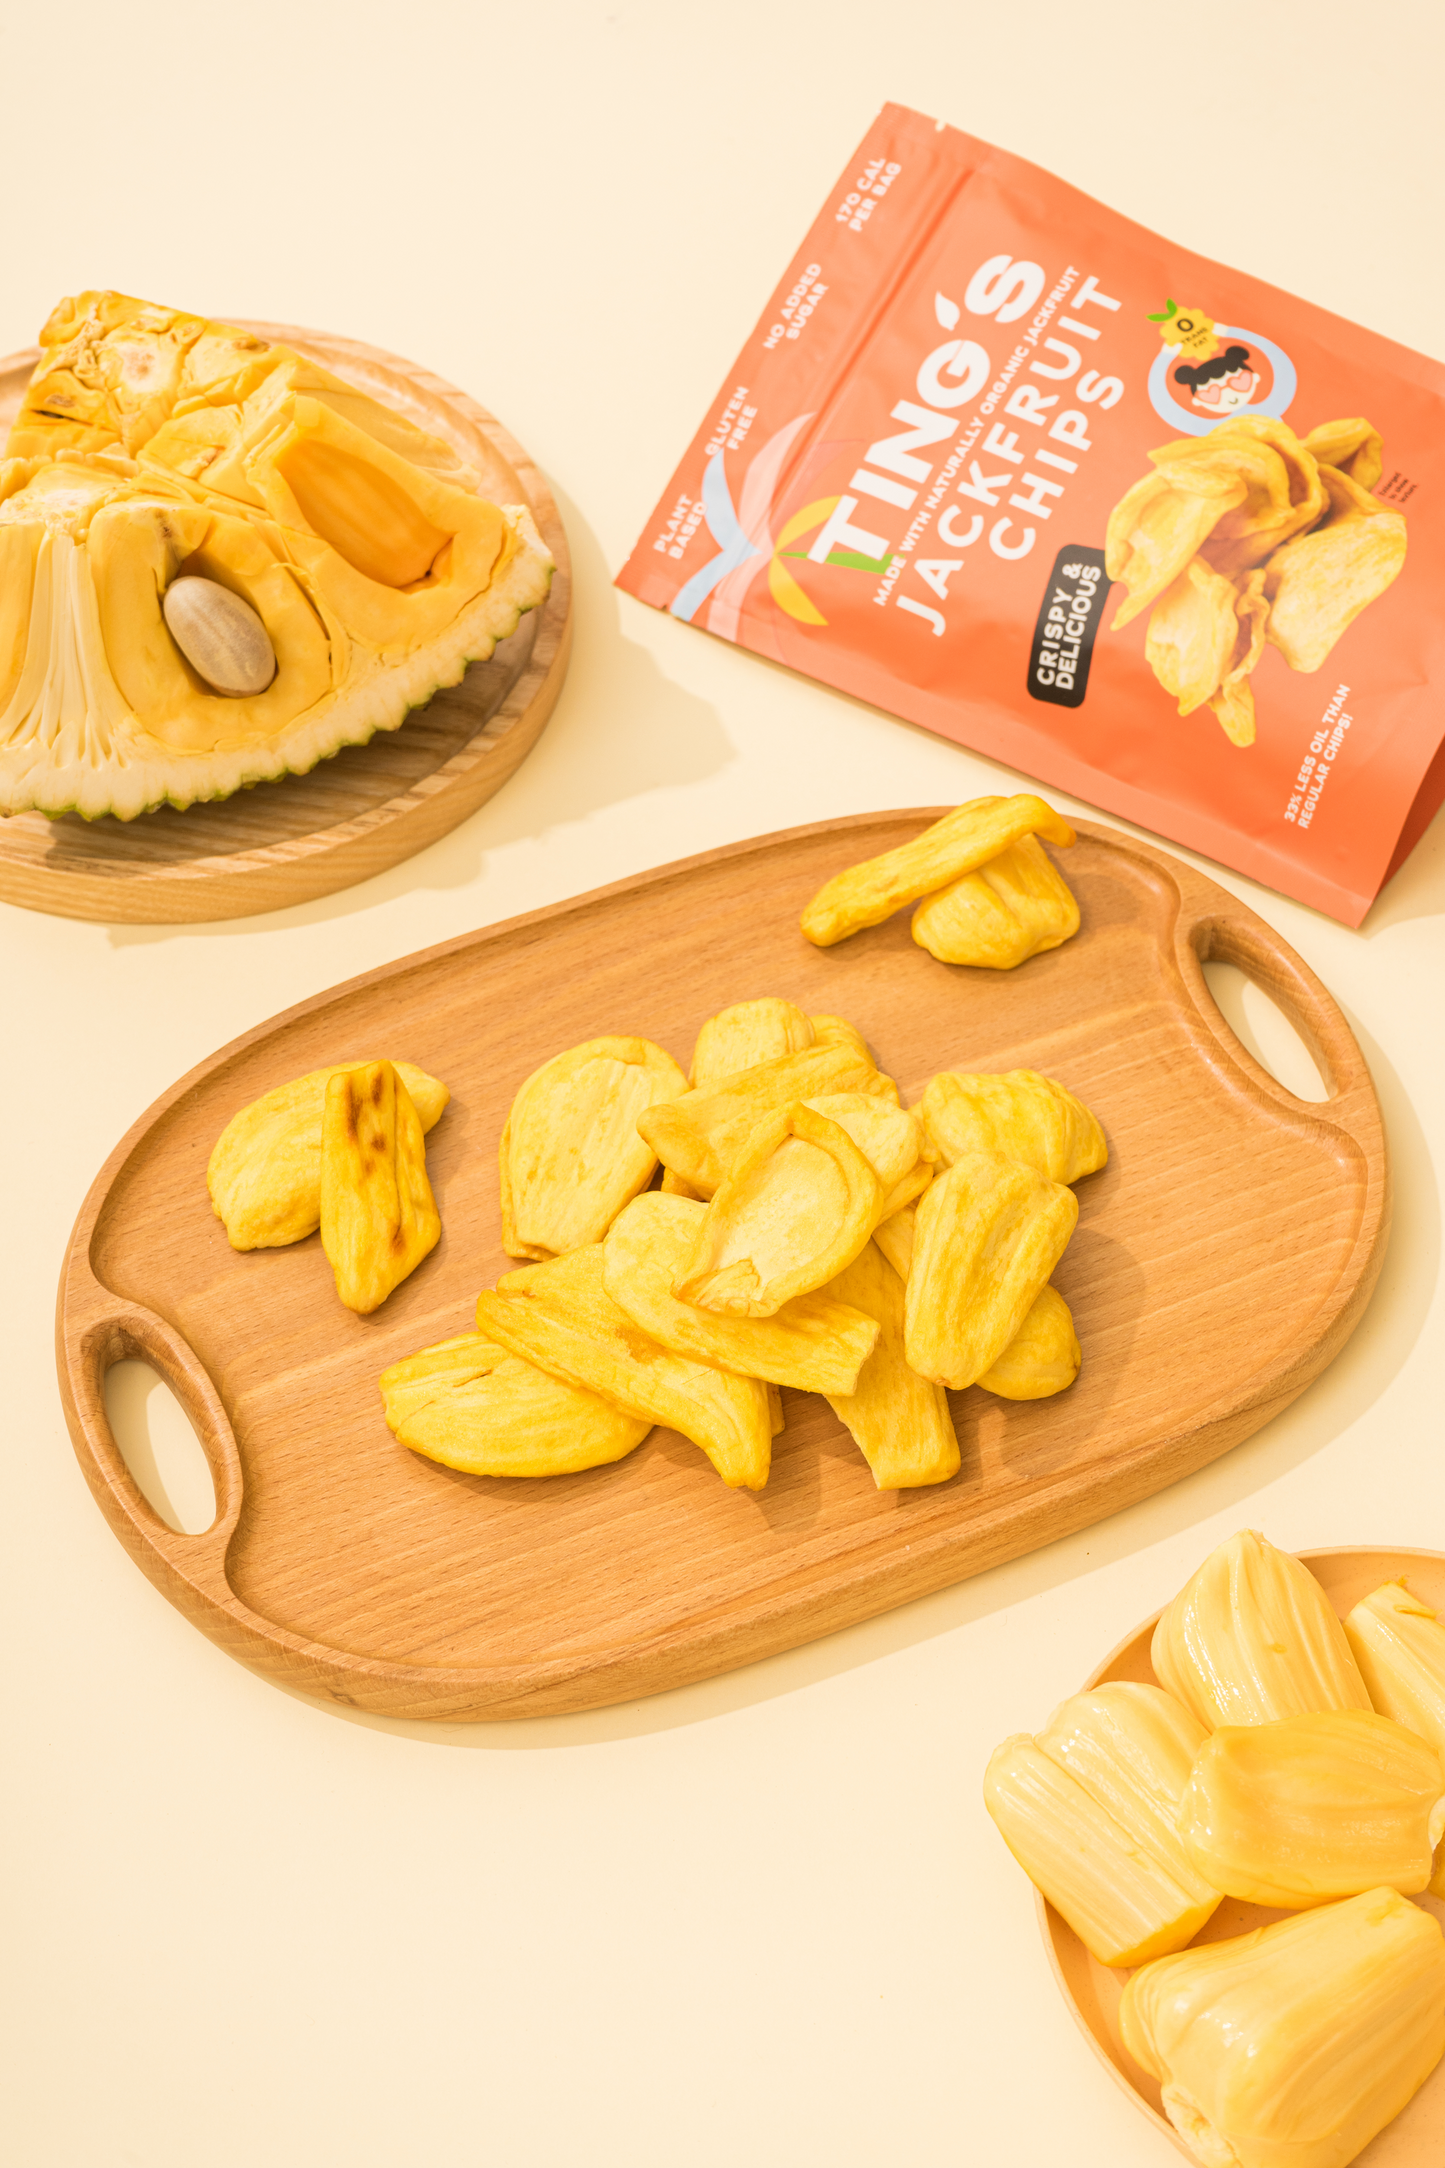 Ting's Jackfruit Chips | Original Flavor (4-Pack)